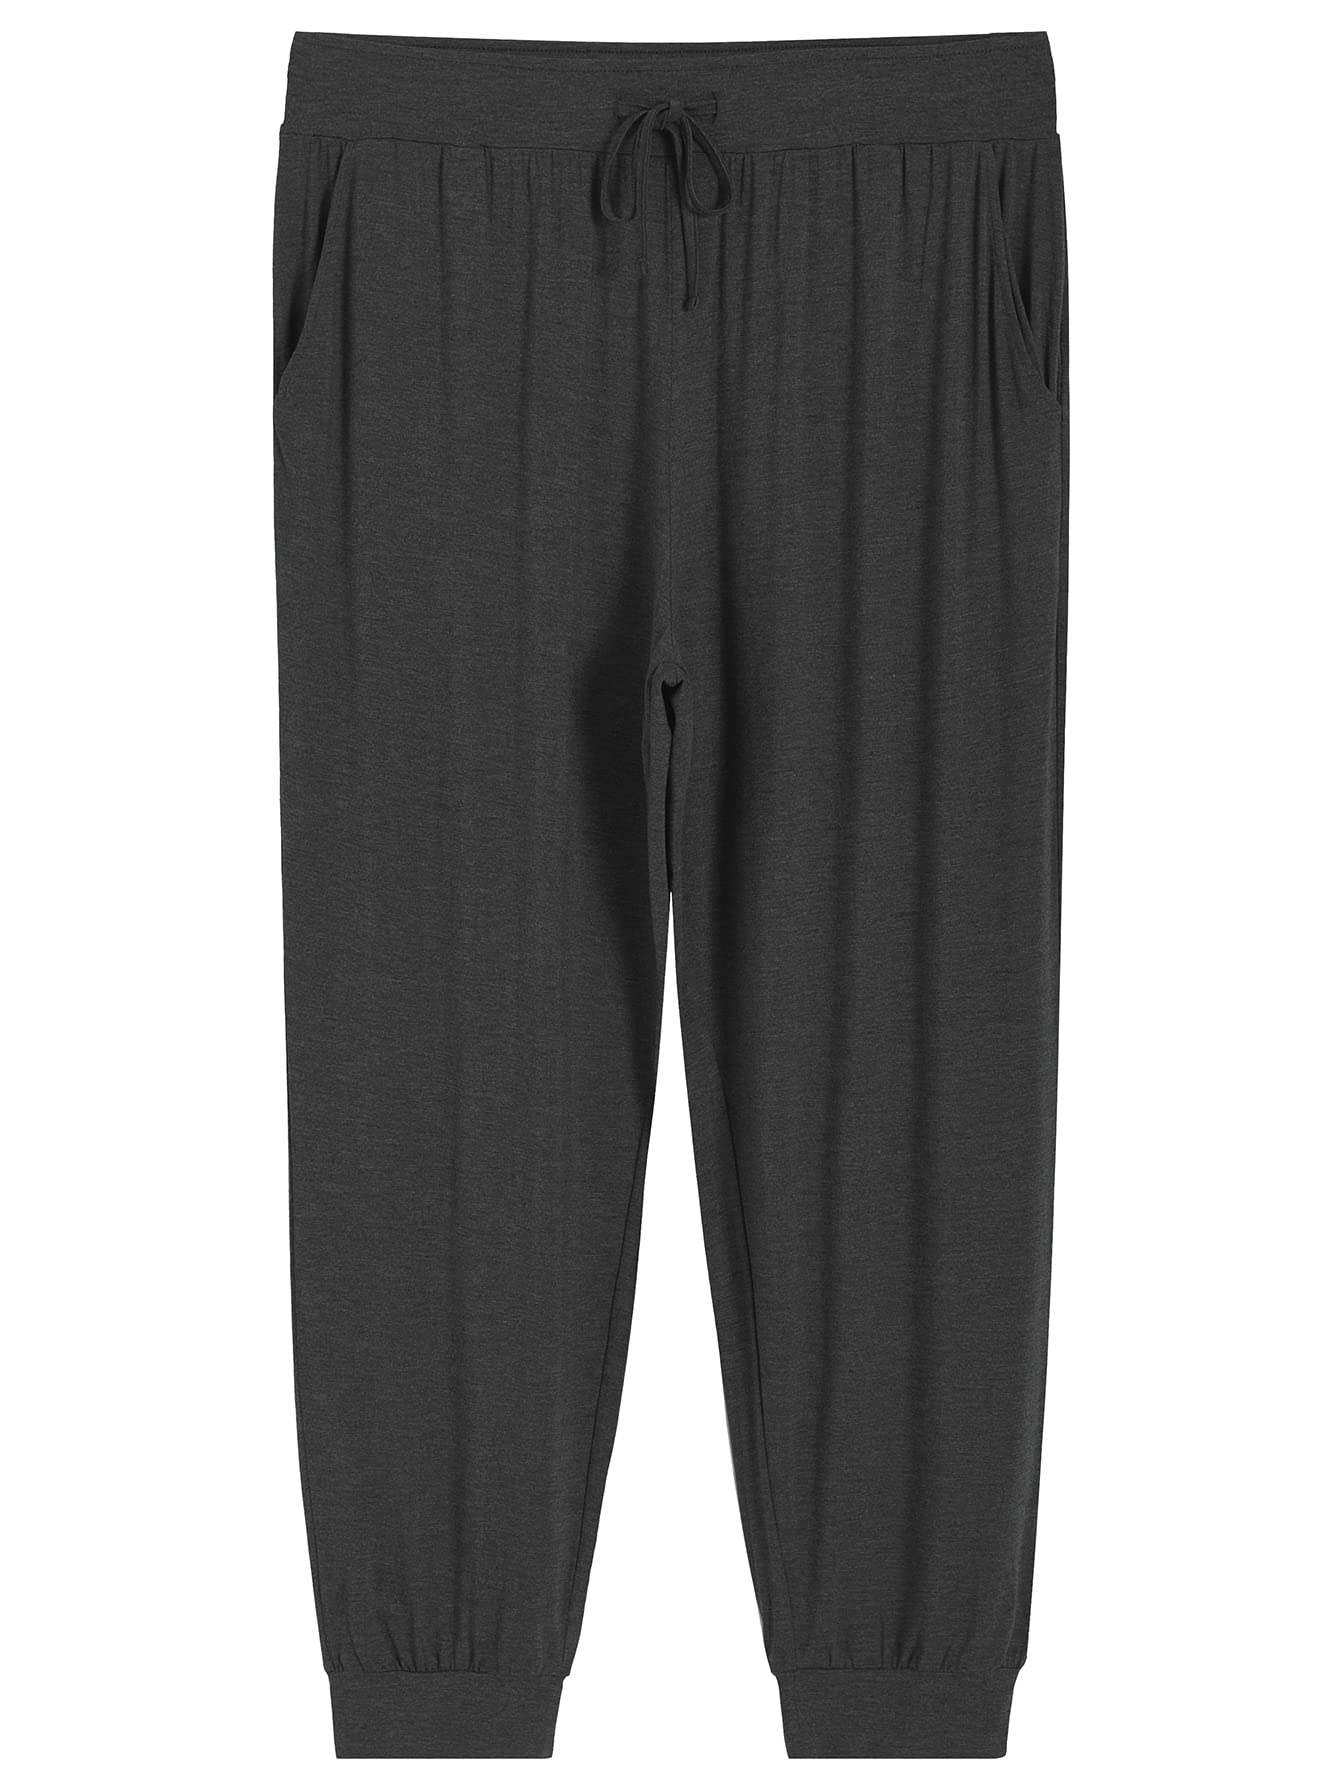 Plus 2X (22W-24W) - Loungewear - Full-Length Pants 